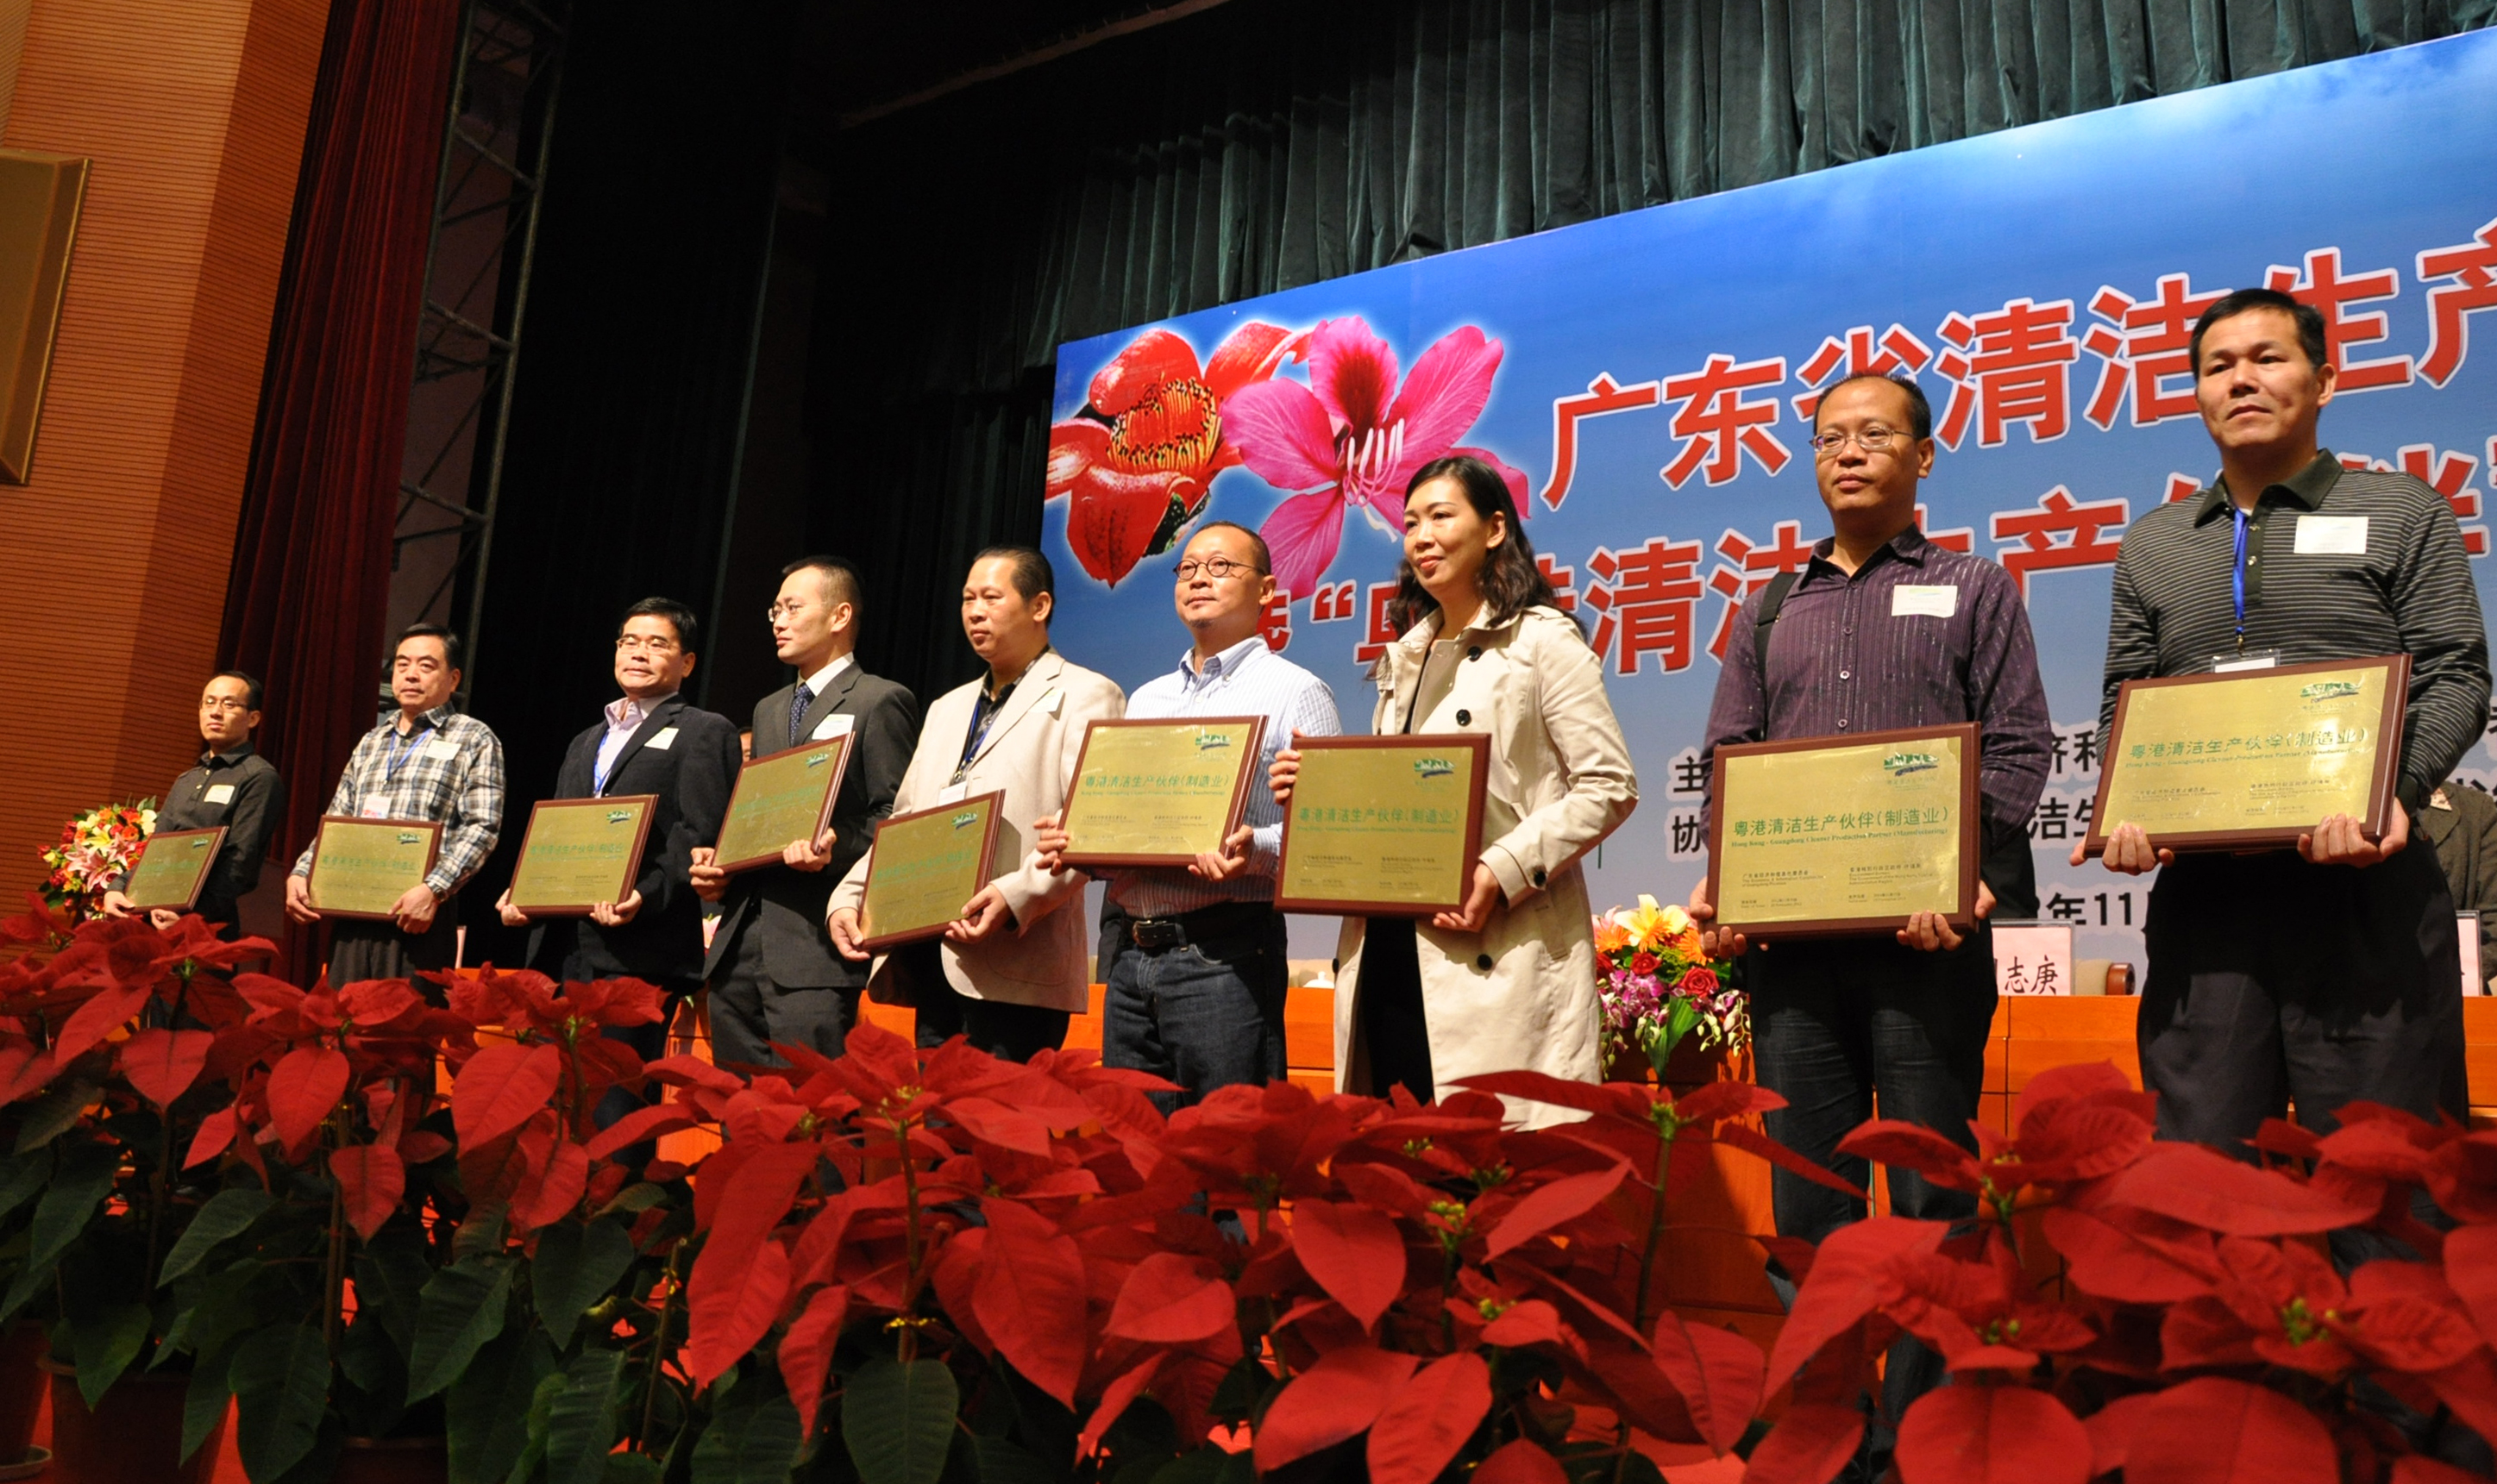 136 enterprises received commendation